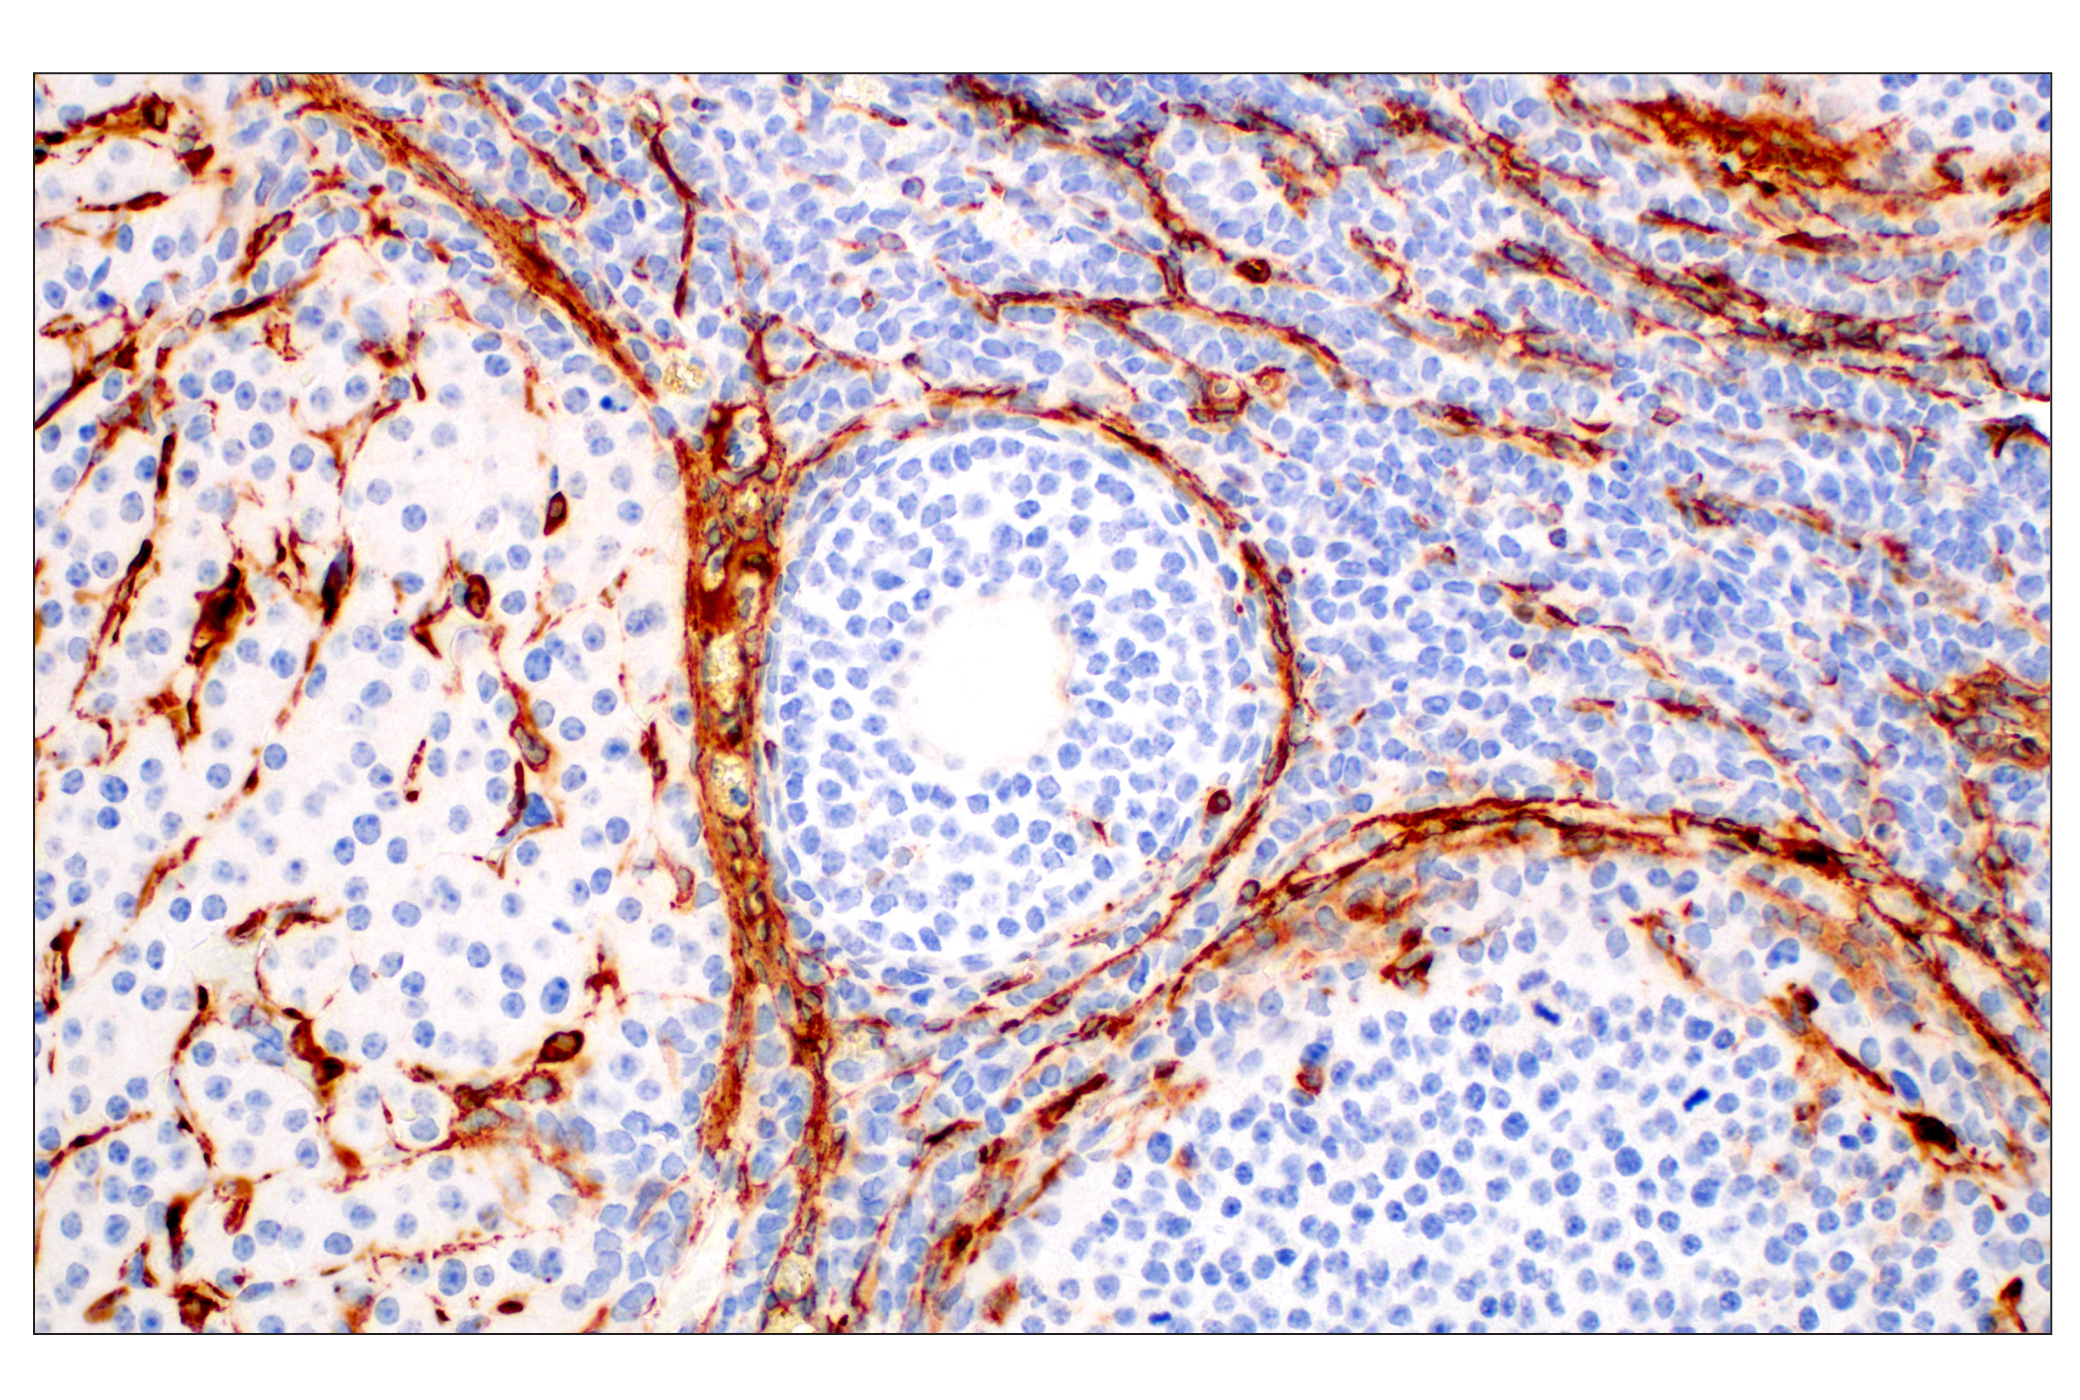  Image 59: Cancer Associated Fibroblast Marker Antibody Sampler Kit